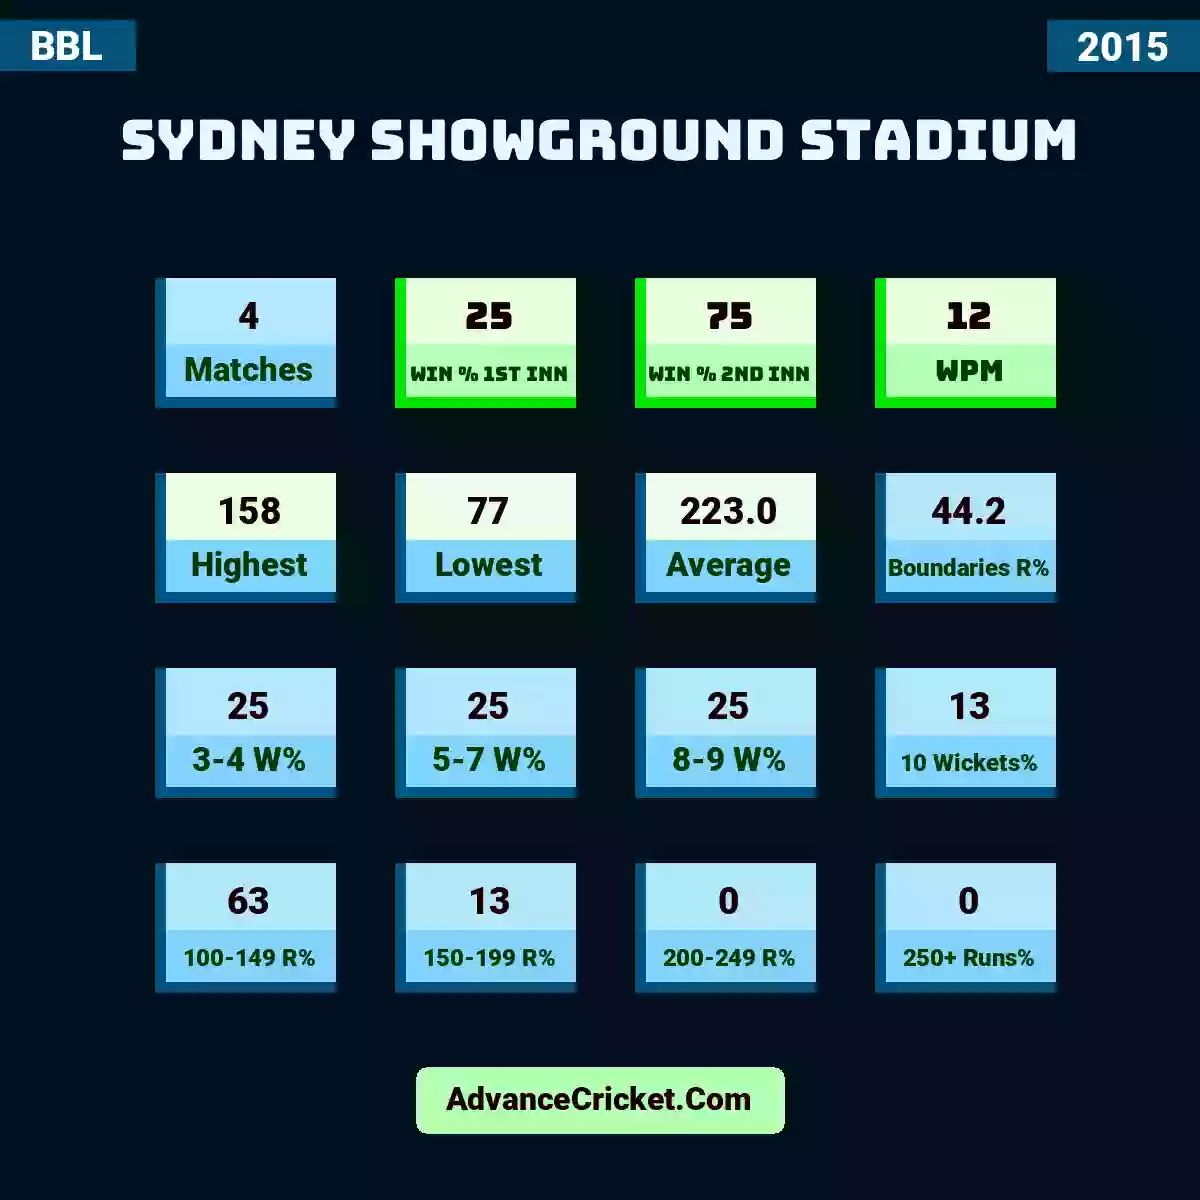 Image showing Sydney Showground Stadium with Matches: 4, Win % 1st Inn: 25, Win % 2nd Inn: 75, WPM: 12, Highest: 158, Lowest: 77, Average: 223.0, Boundaries R%: 44.2, 3-4 W%: 25, 5-7 W%: 25, 8-9 W%: 25, 10 Wickets%: 13, 100-149 R%: 63, 150-199 R%: 13, 200-249 R%: 0, 250+ Runs%: 0.